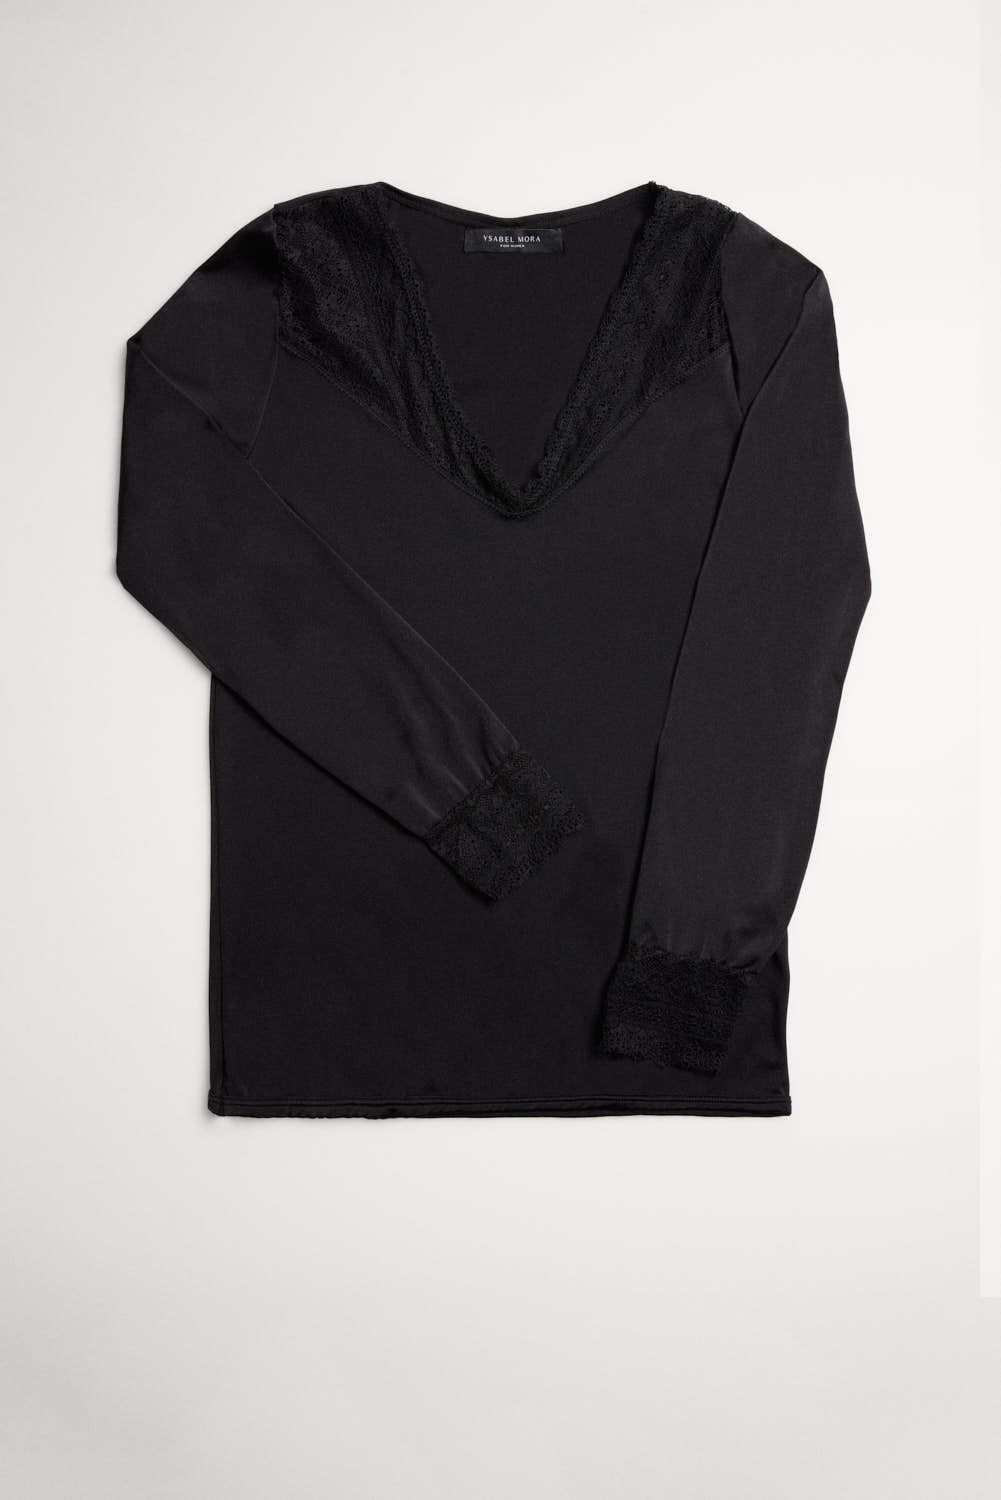 Camiseta térmica lencera negra manga larga 70015 de Ysabel Mora